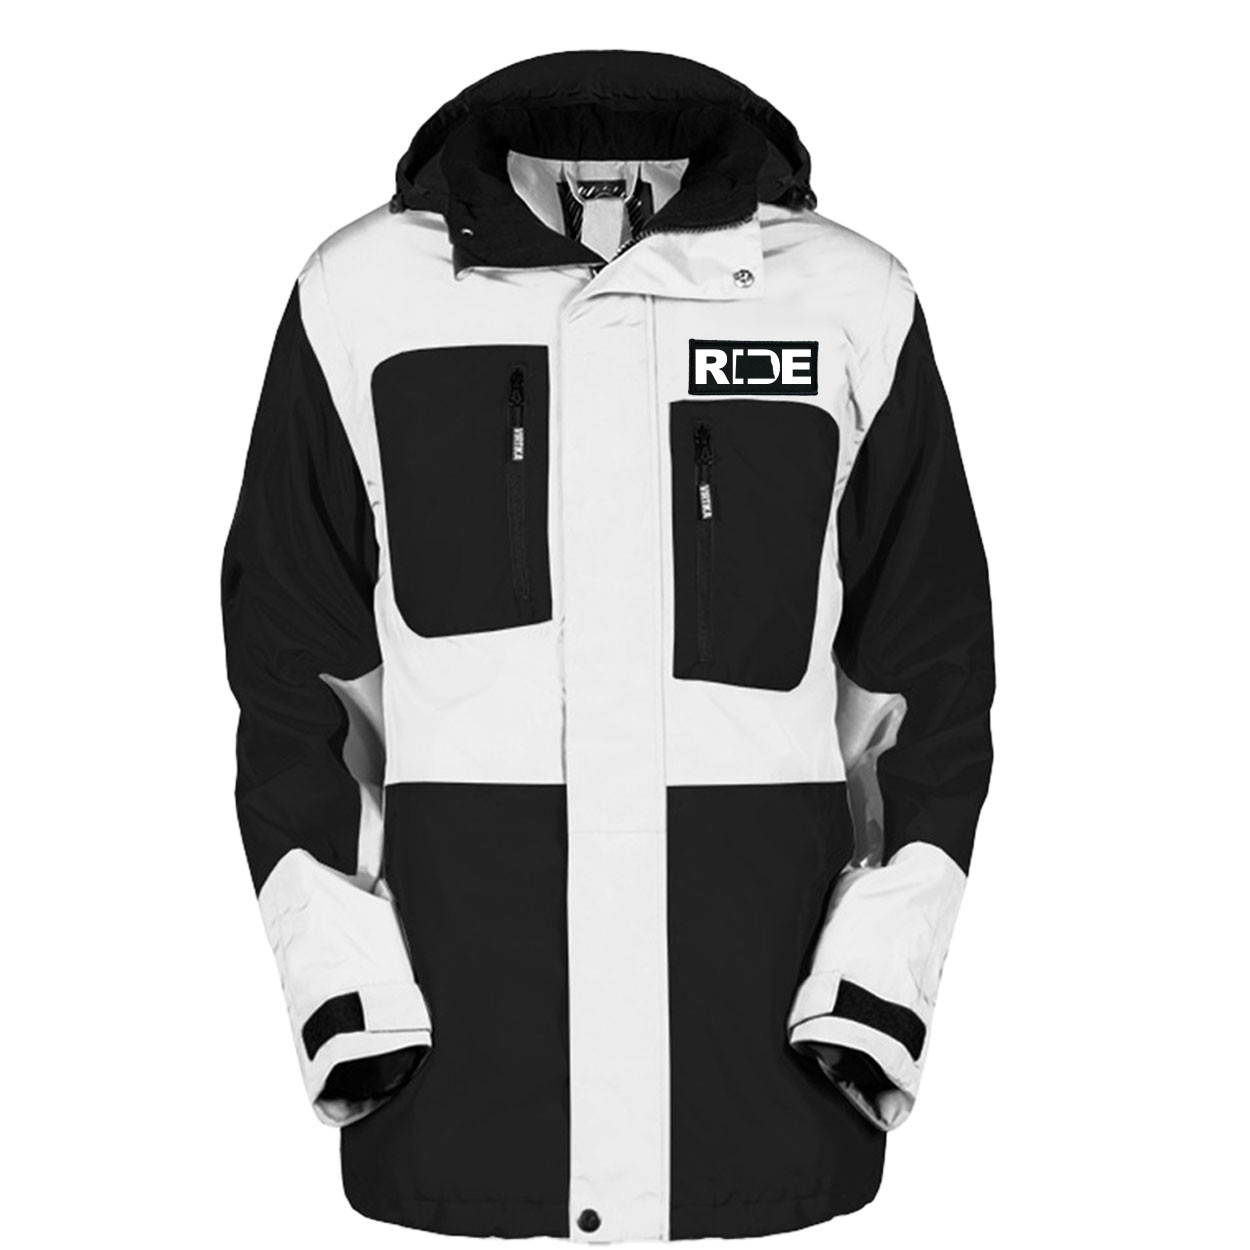 Ride North Dakota Classic Woven Patch Pro Snowboard Jacket (Black/White)